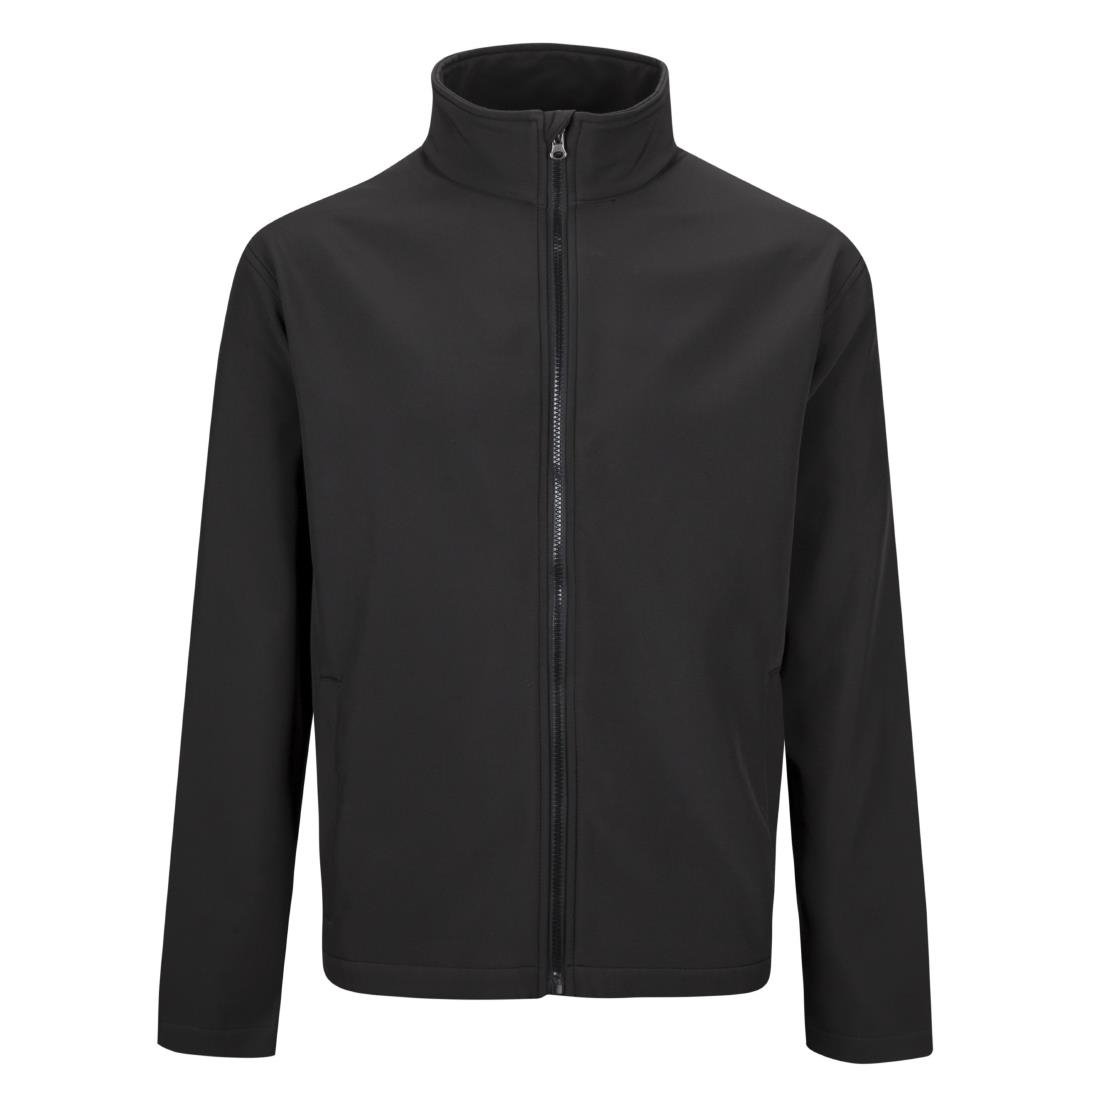 BA109-M Portwest Softshell Two Layer Jacket Black Size M